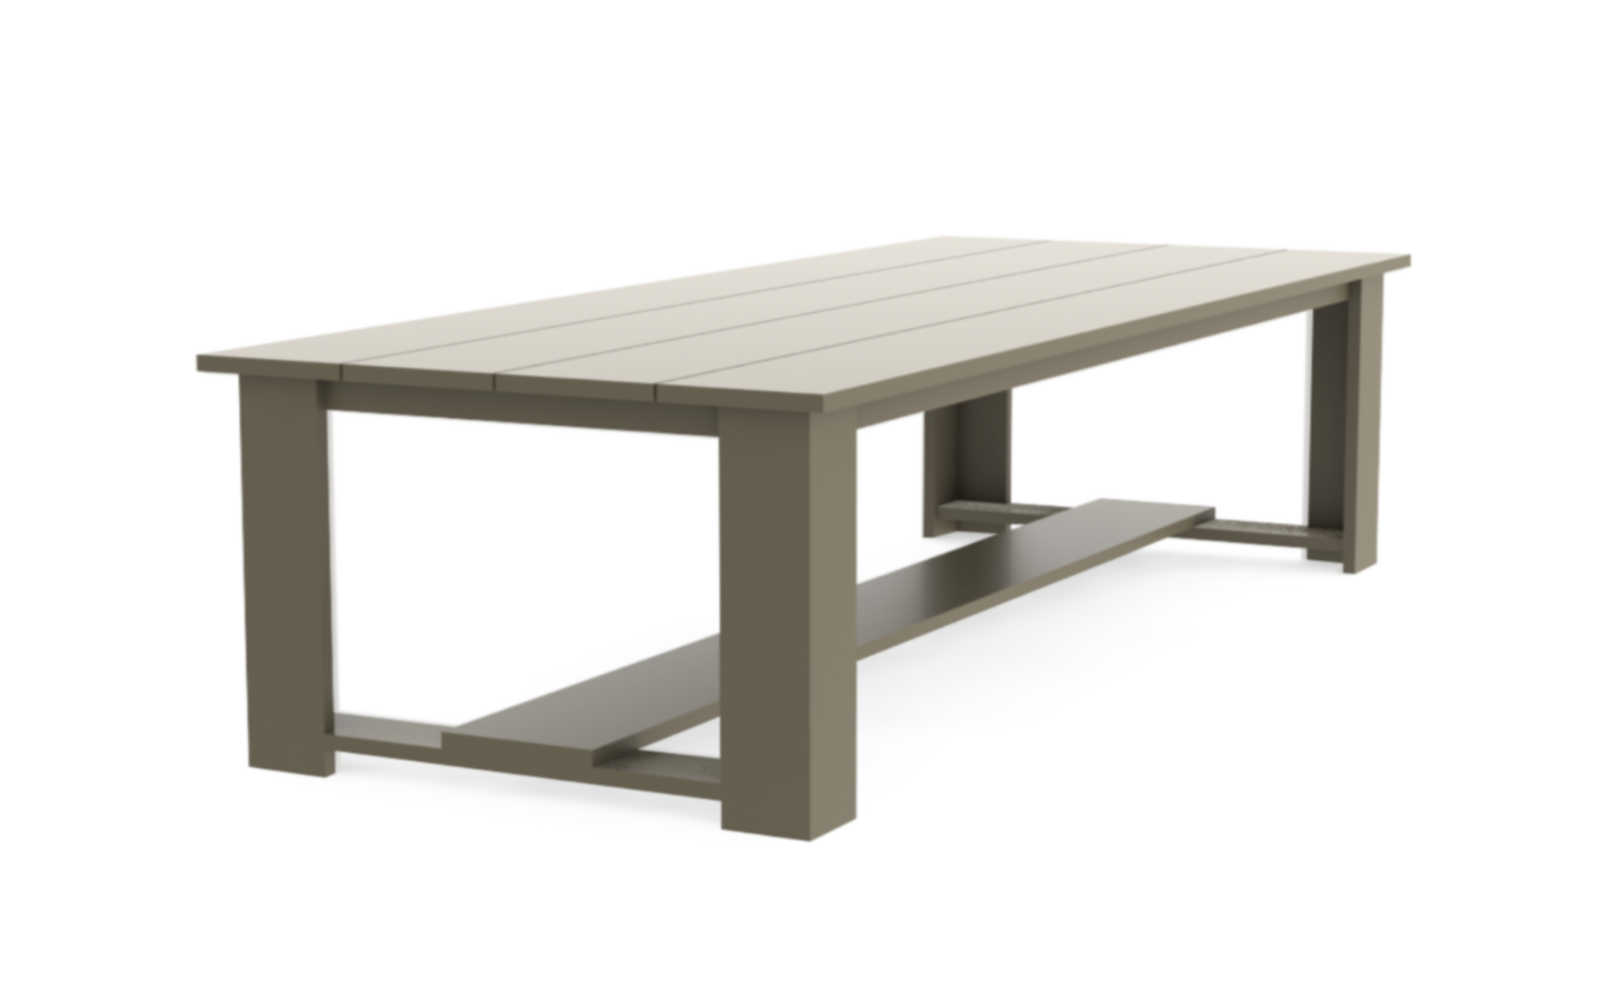 MaikelsDesign custom garden table shown at an angle